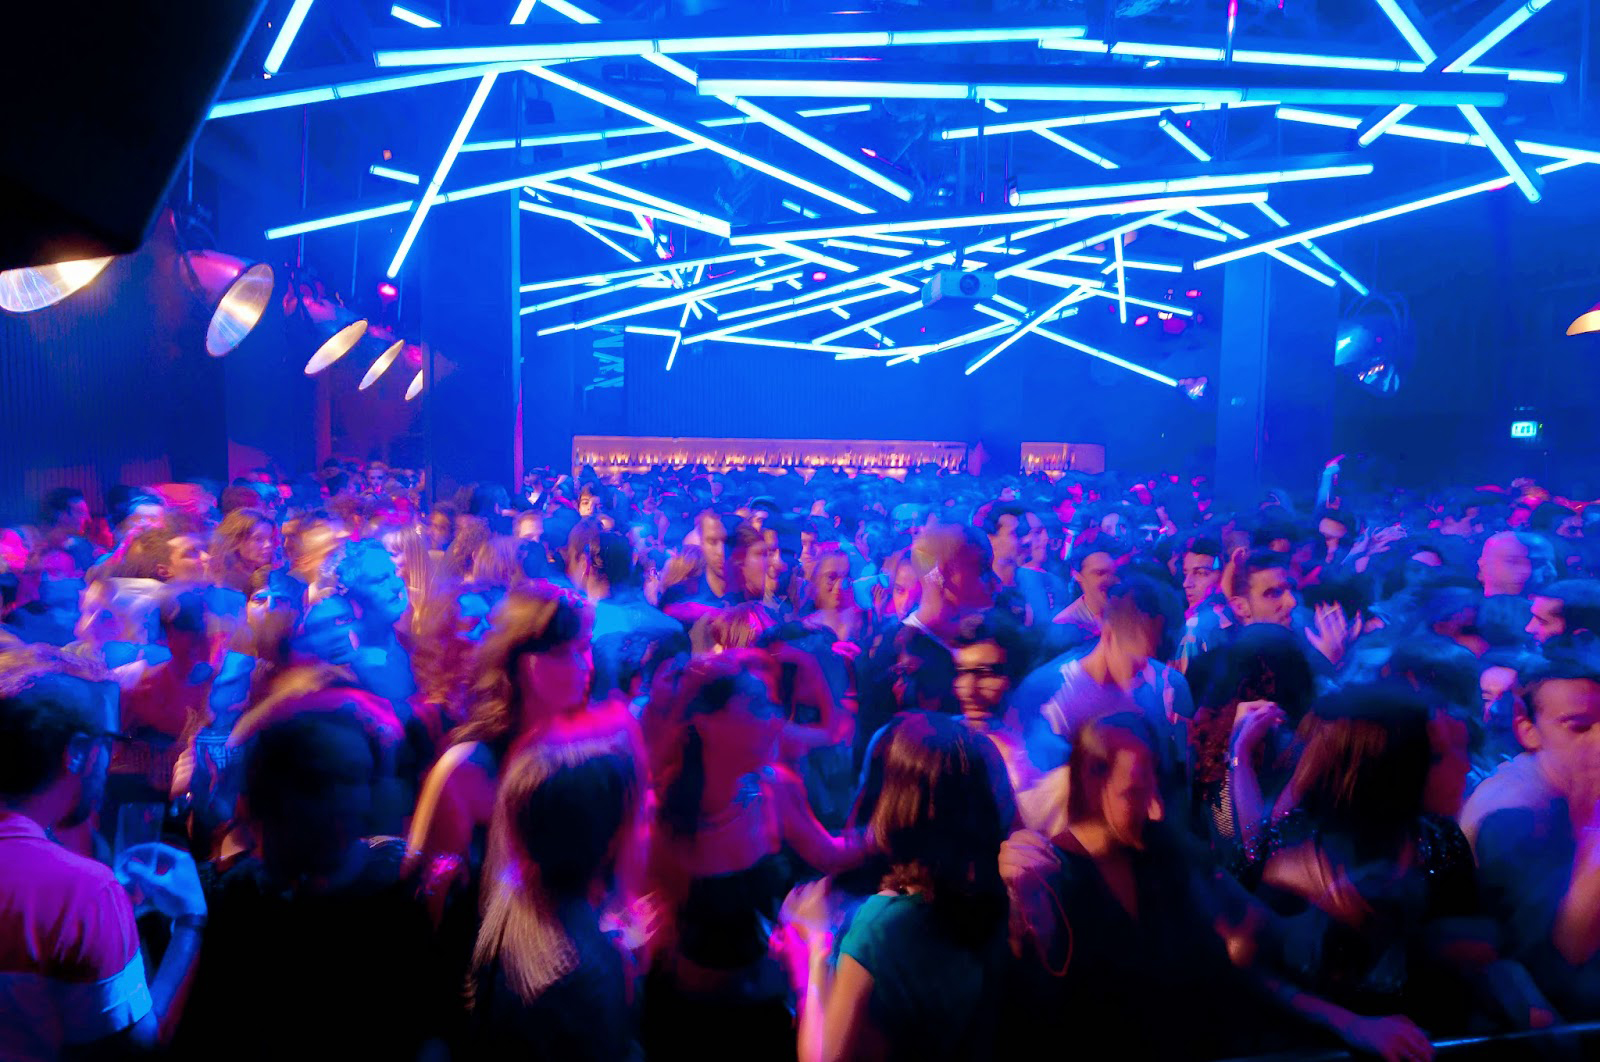 7 awesome nightclubs around the world